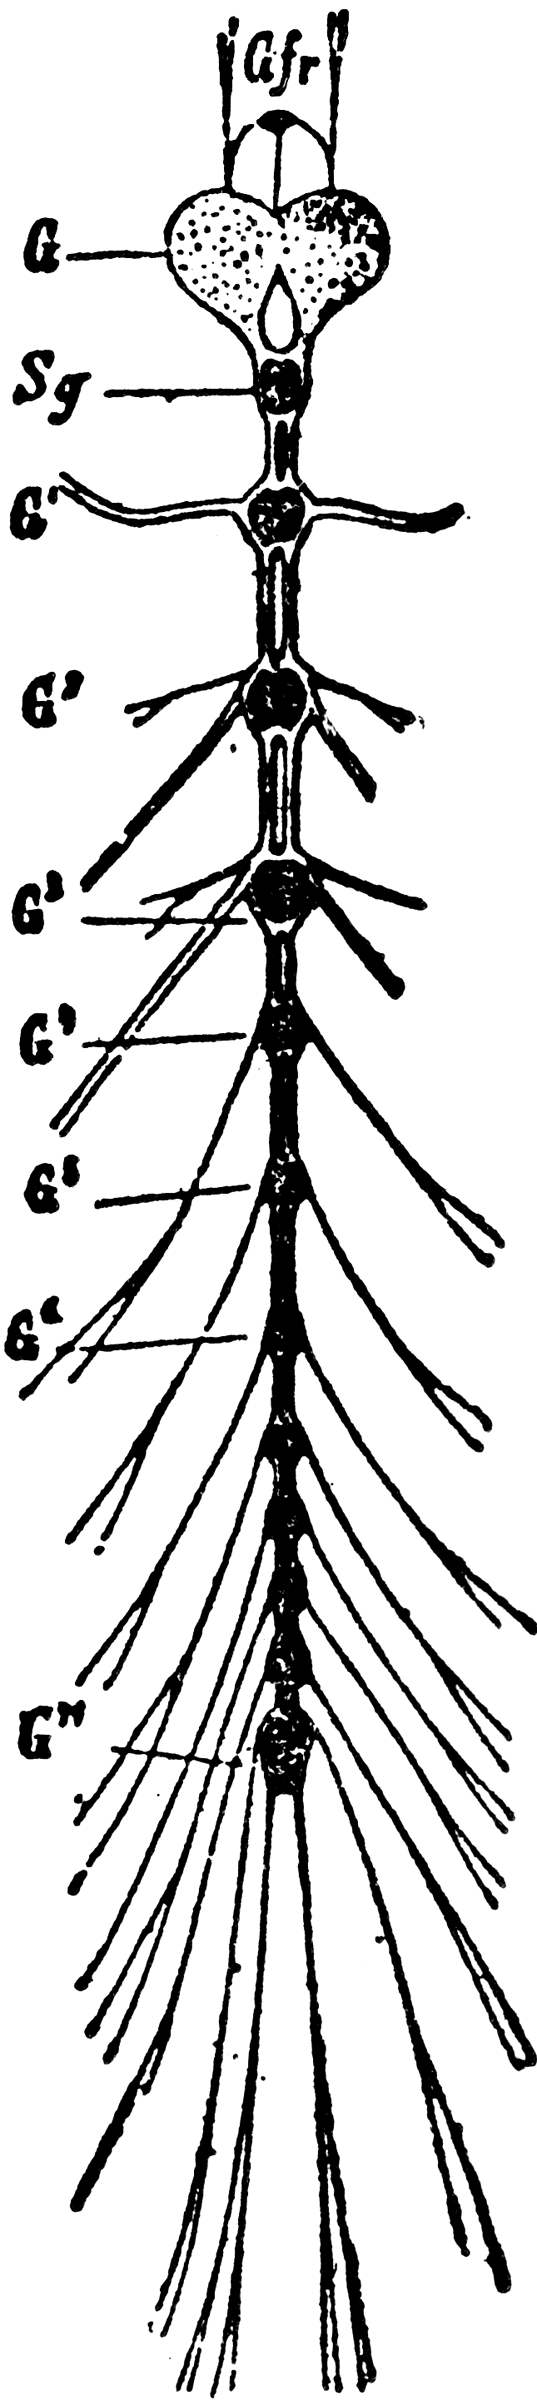 Nervous System Of A Ladybug Larva   Clipart Etc